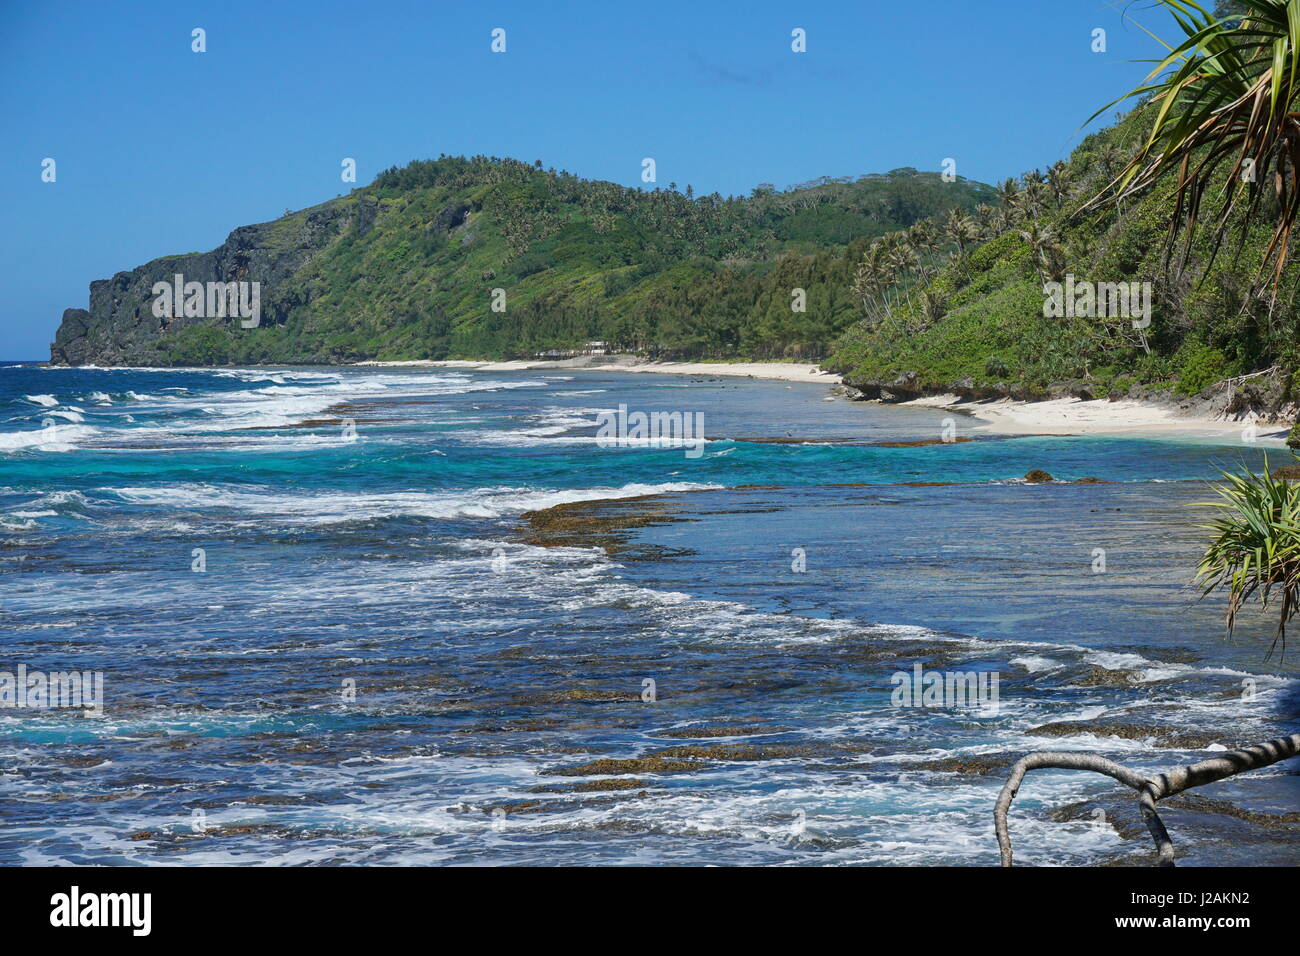 Coastline of the island of Rurutu, Austal archipelago, south Pacific ocean, French Polynesia Stock Photo